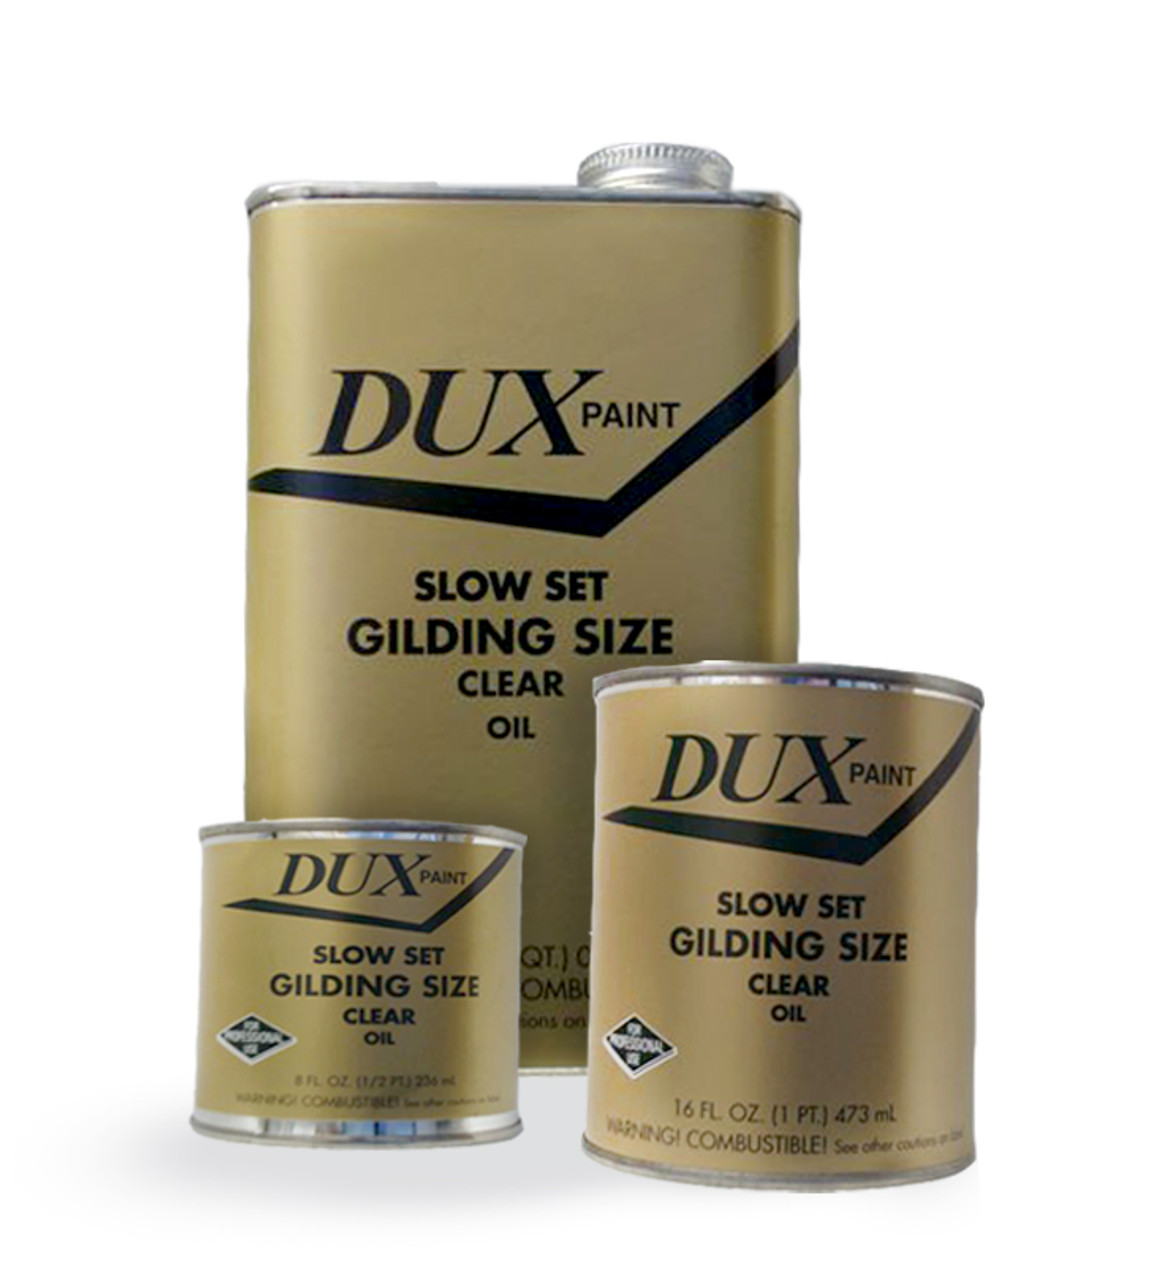 L.A. GOLD LEAF Quick Dry Size adhesive 1gallon 1quart 1pint 1/2pint 1/4pint  